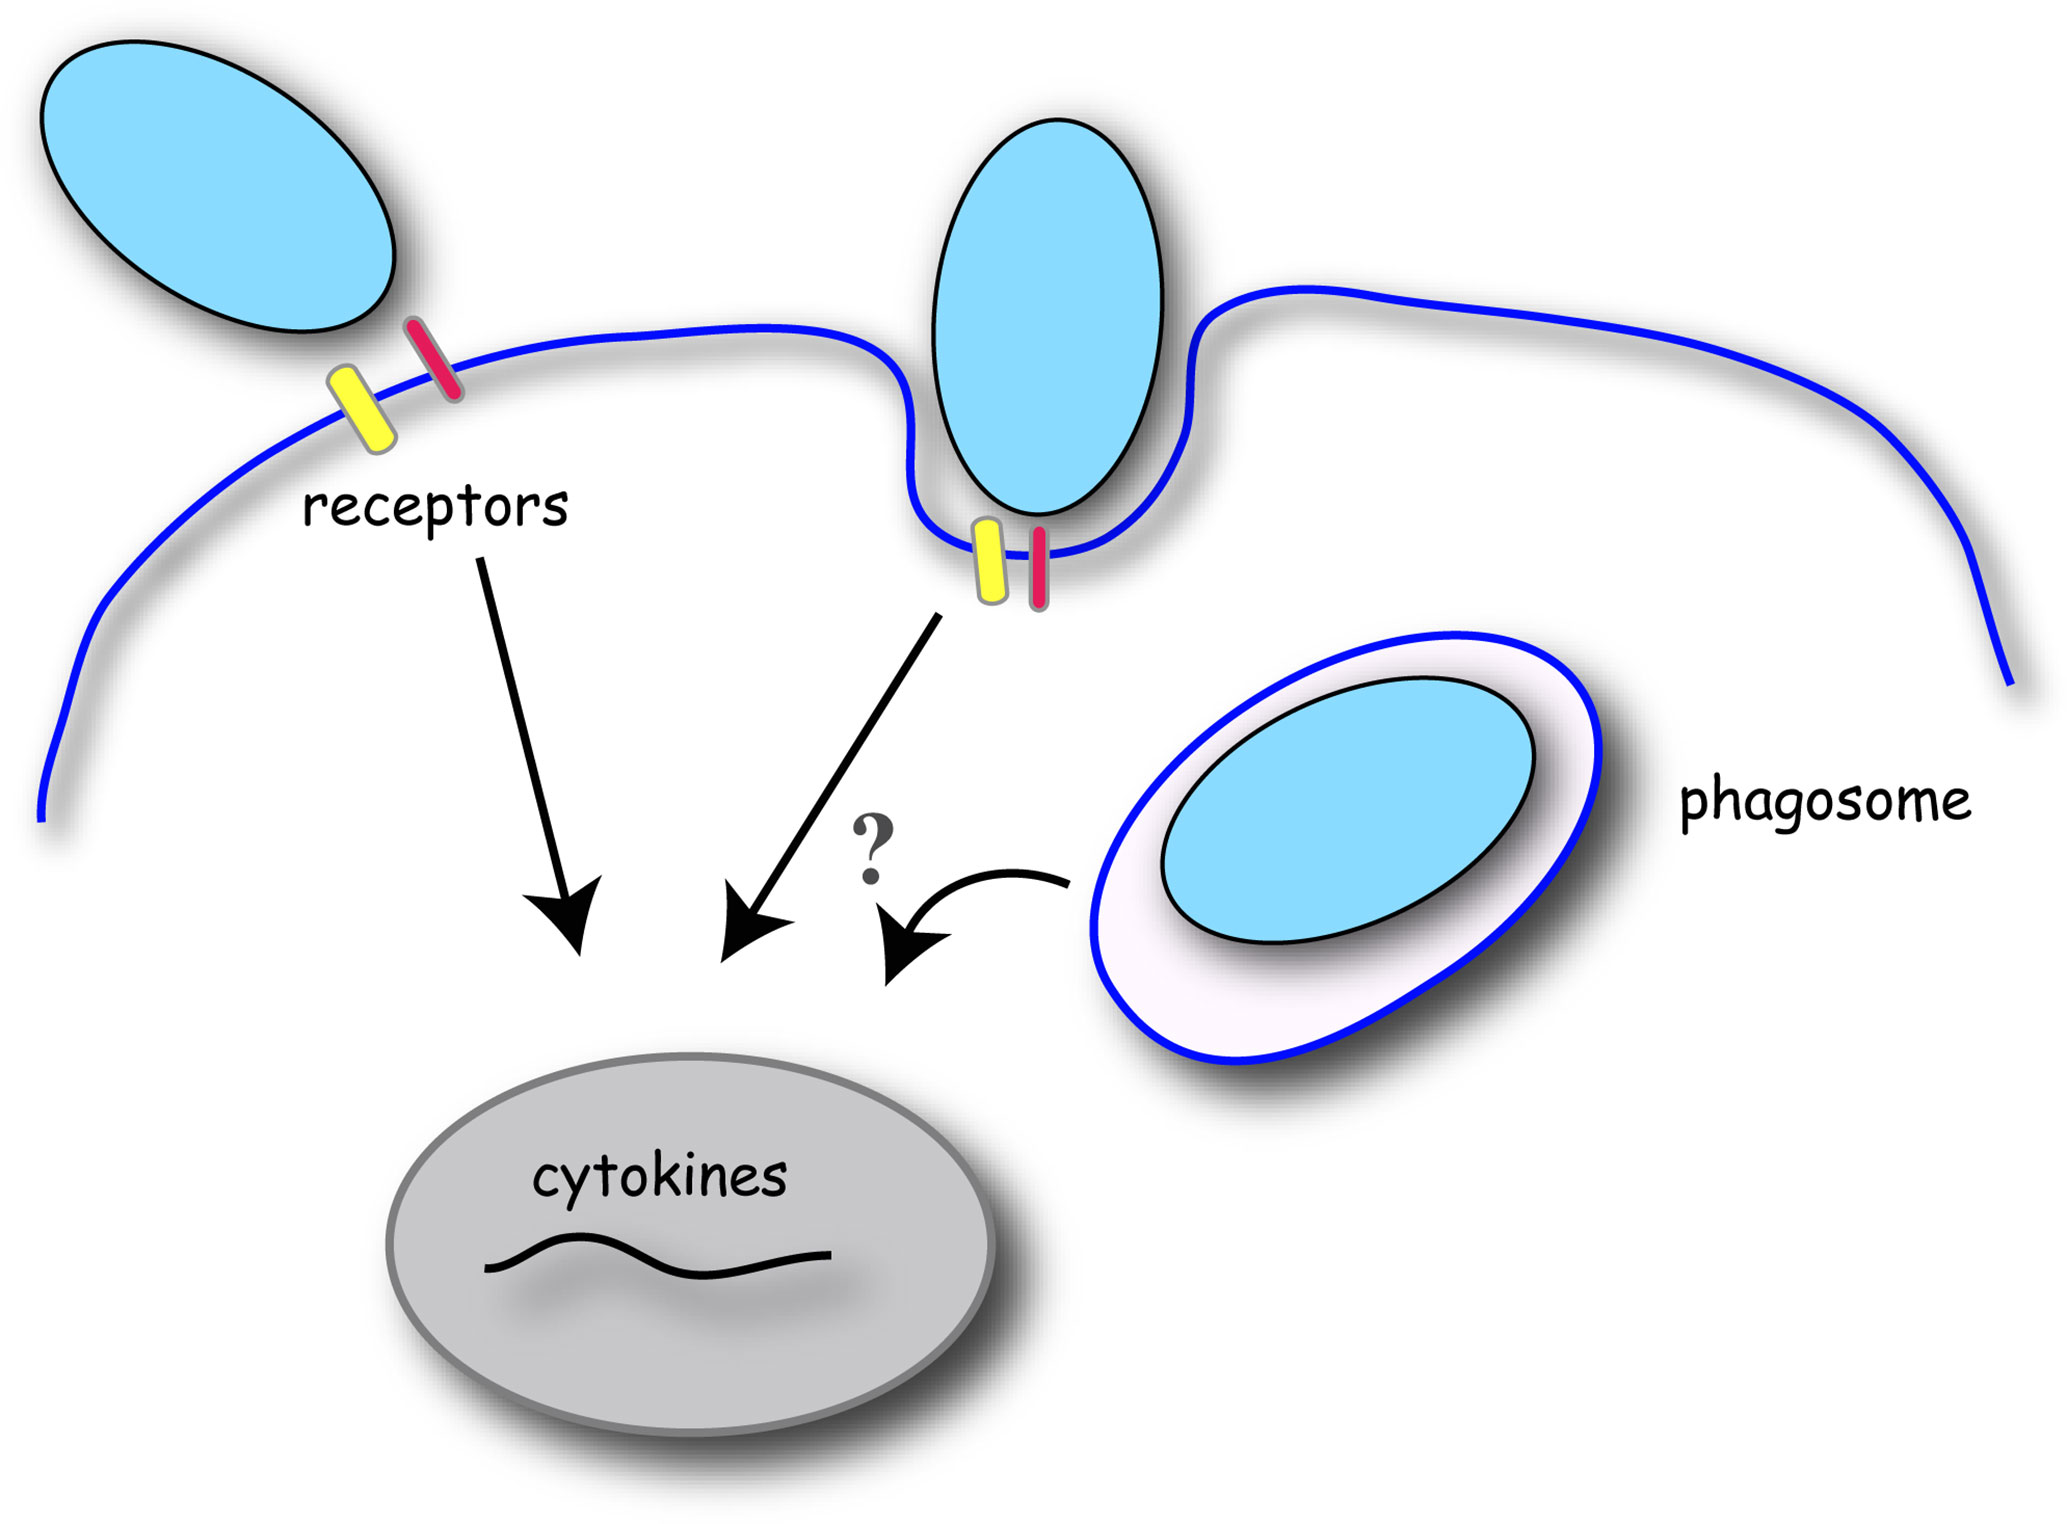 phagocytosis process diagram